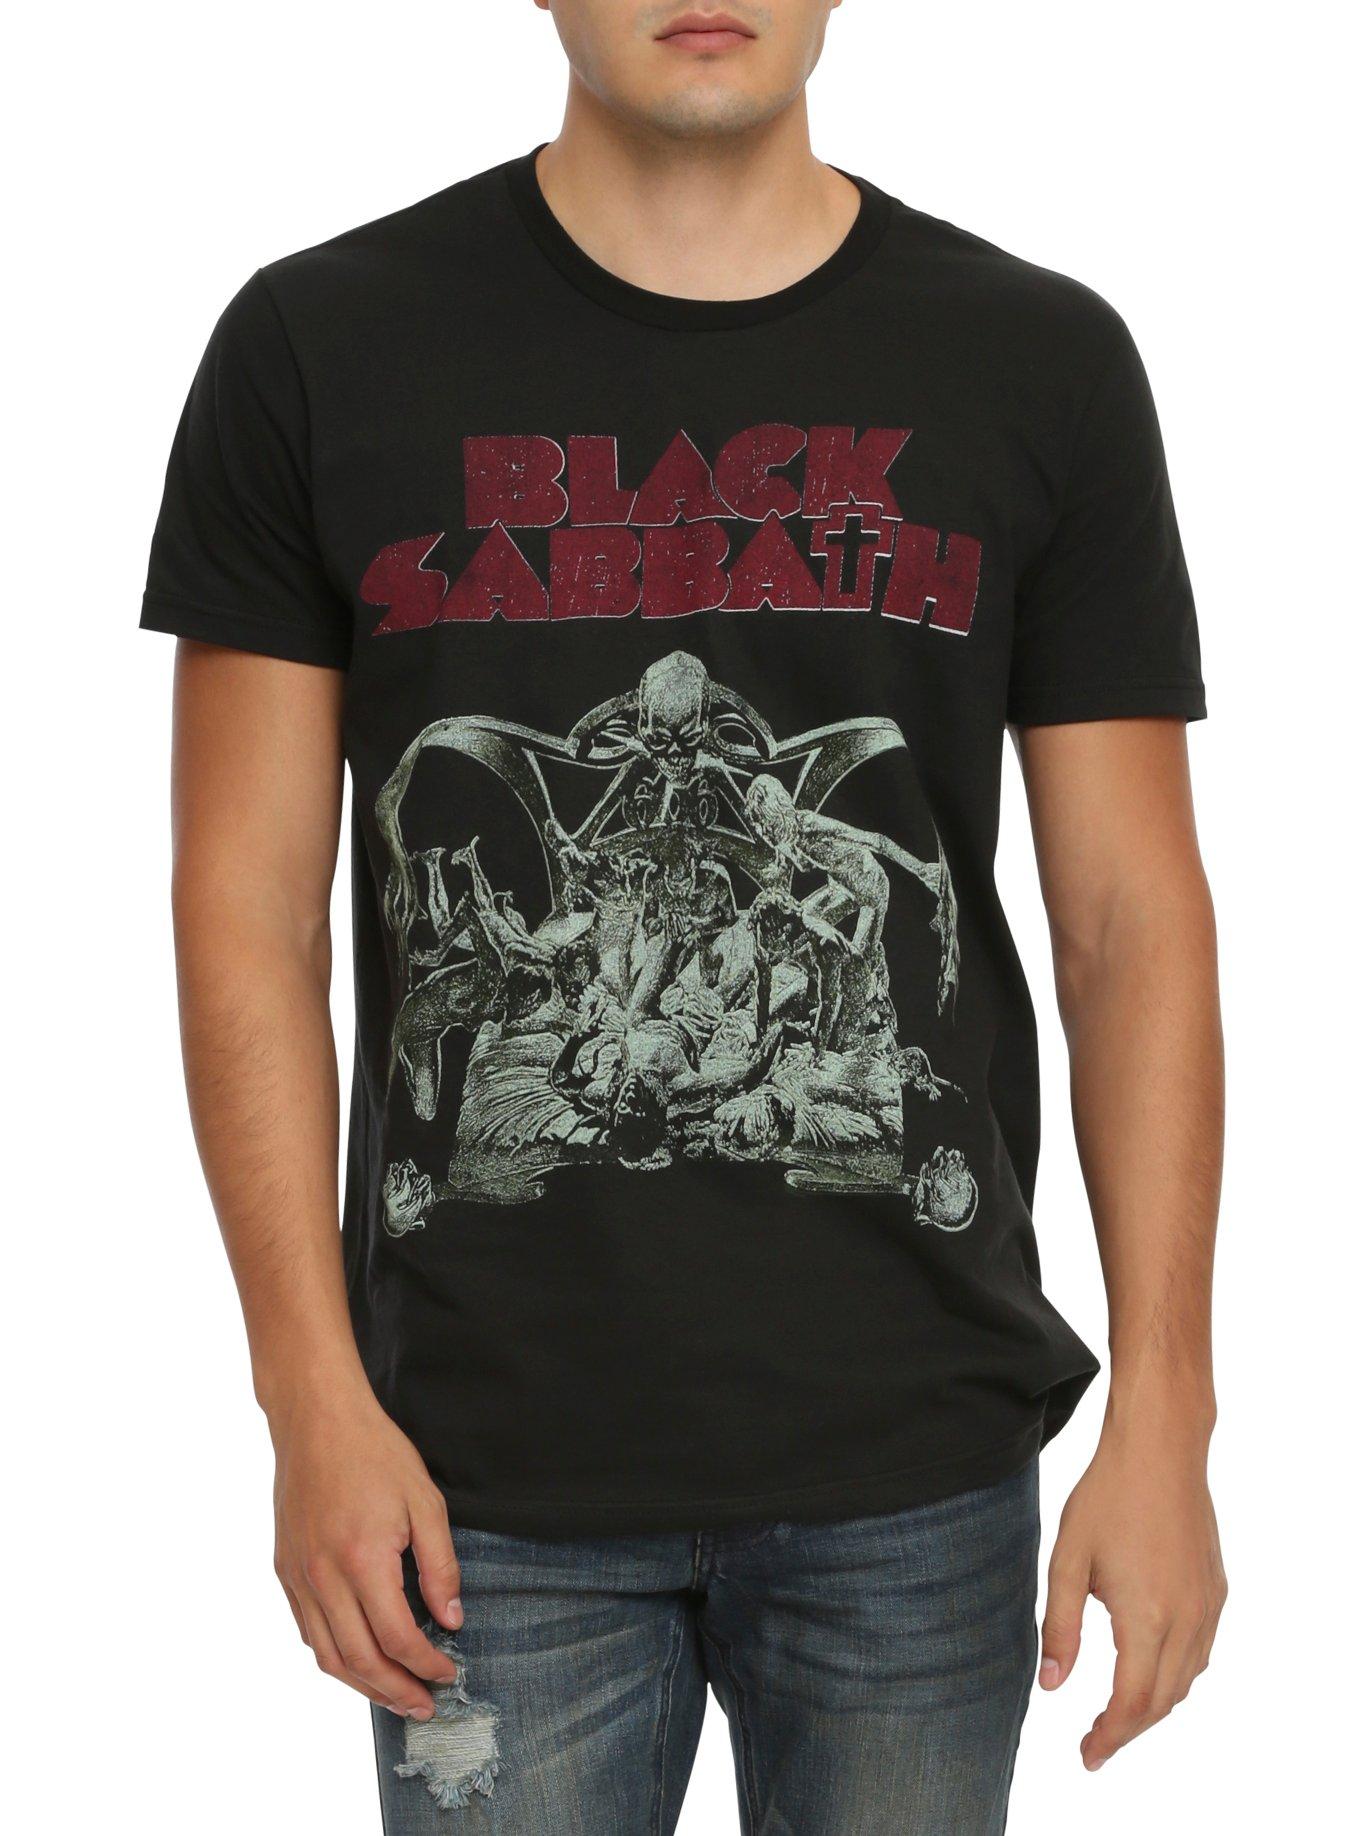 Black Sabbath Sabbath Bloody Sabbath T-Shirt | Hot Topic